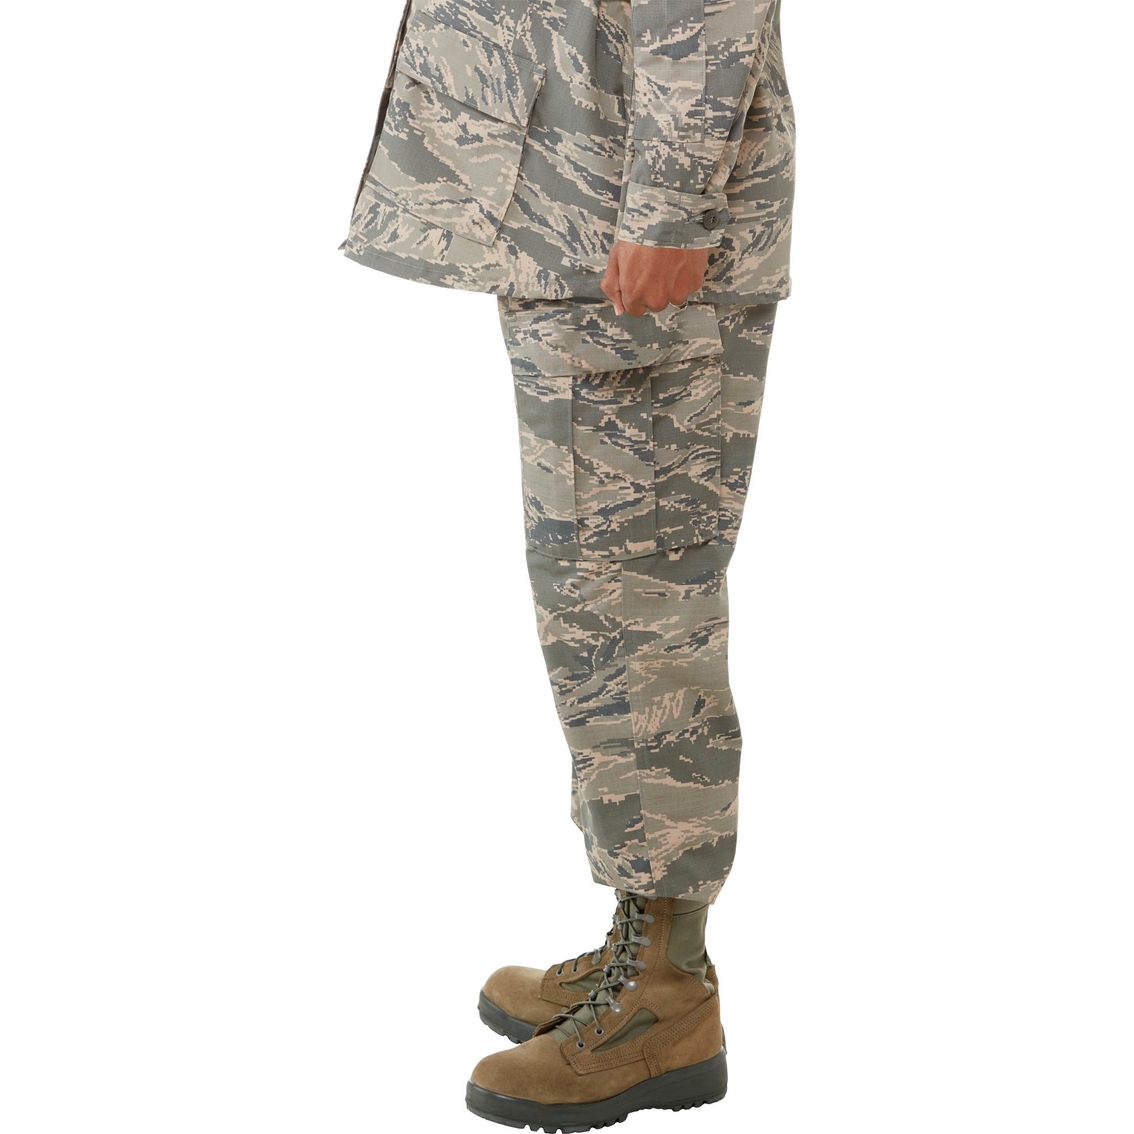 DLATS Air Force Maternity Airman Battle Uniform (MABU) Slacks - Image 4 of 5